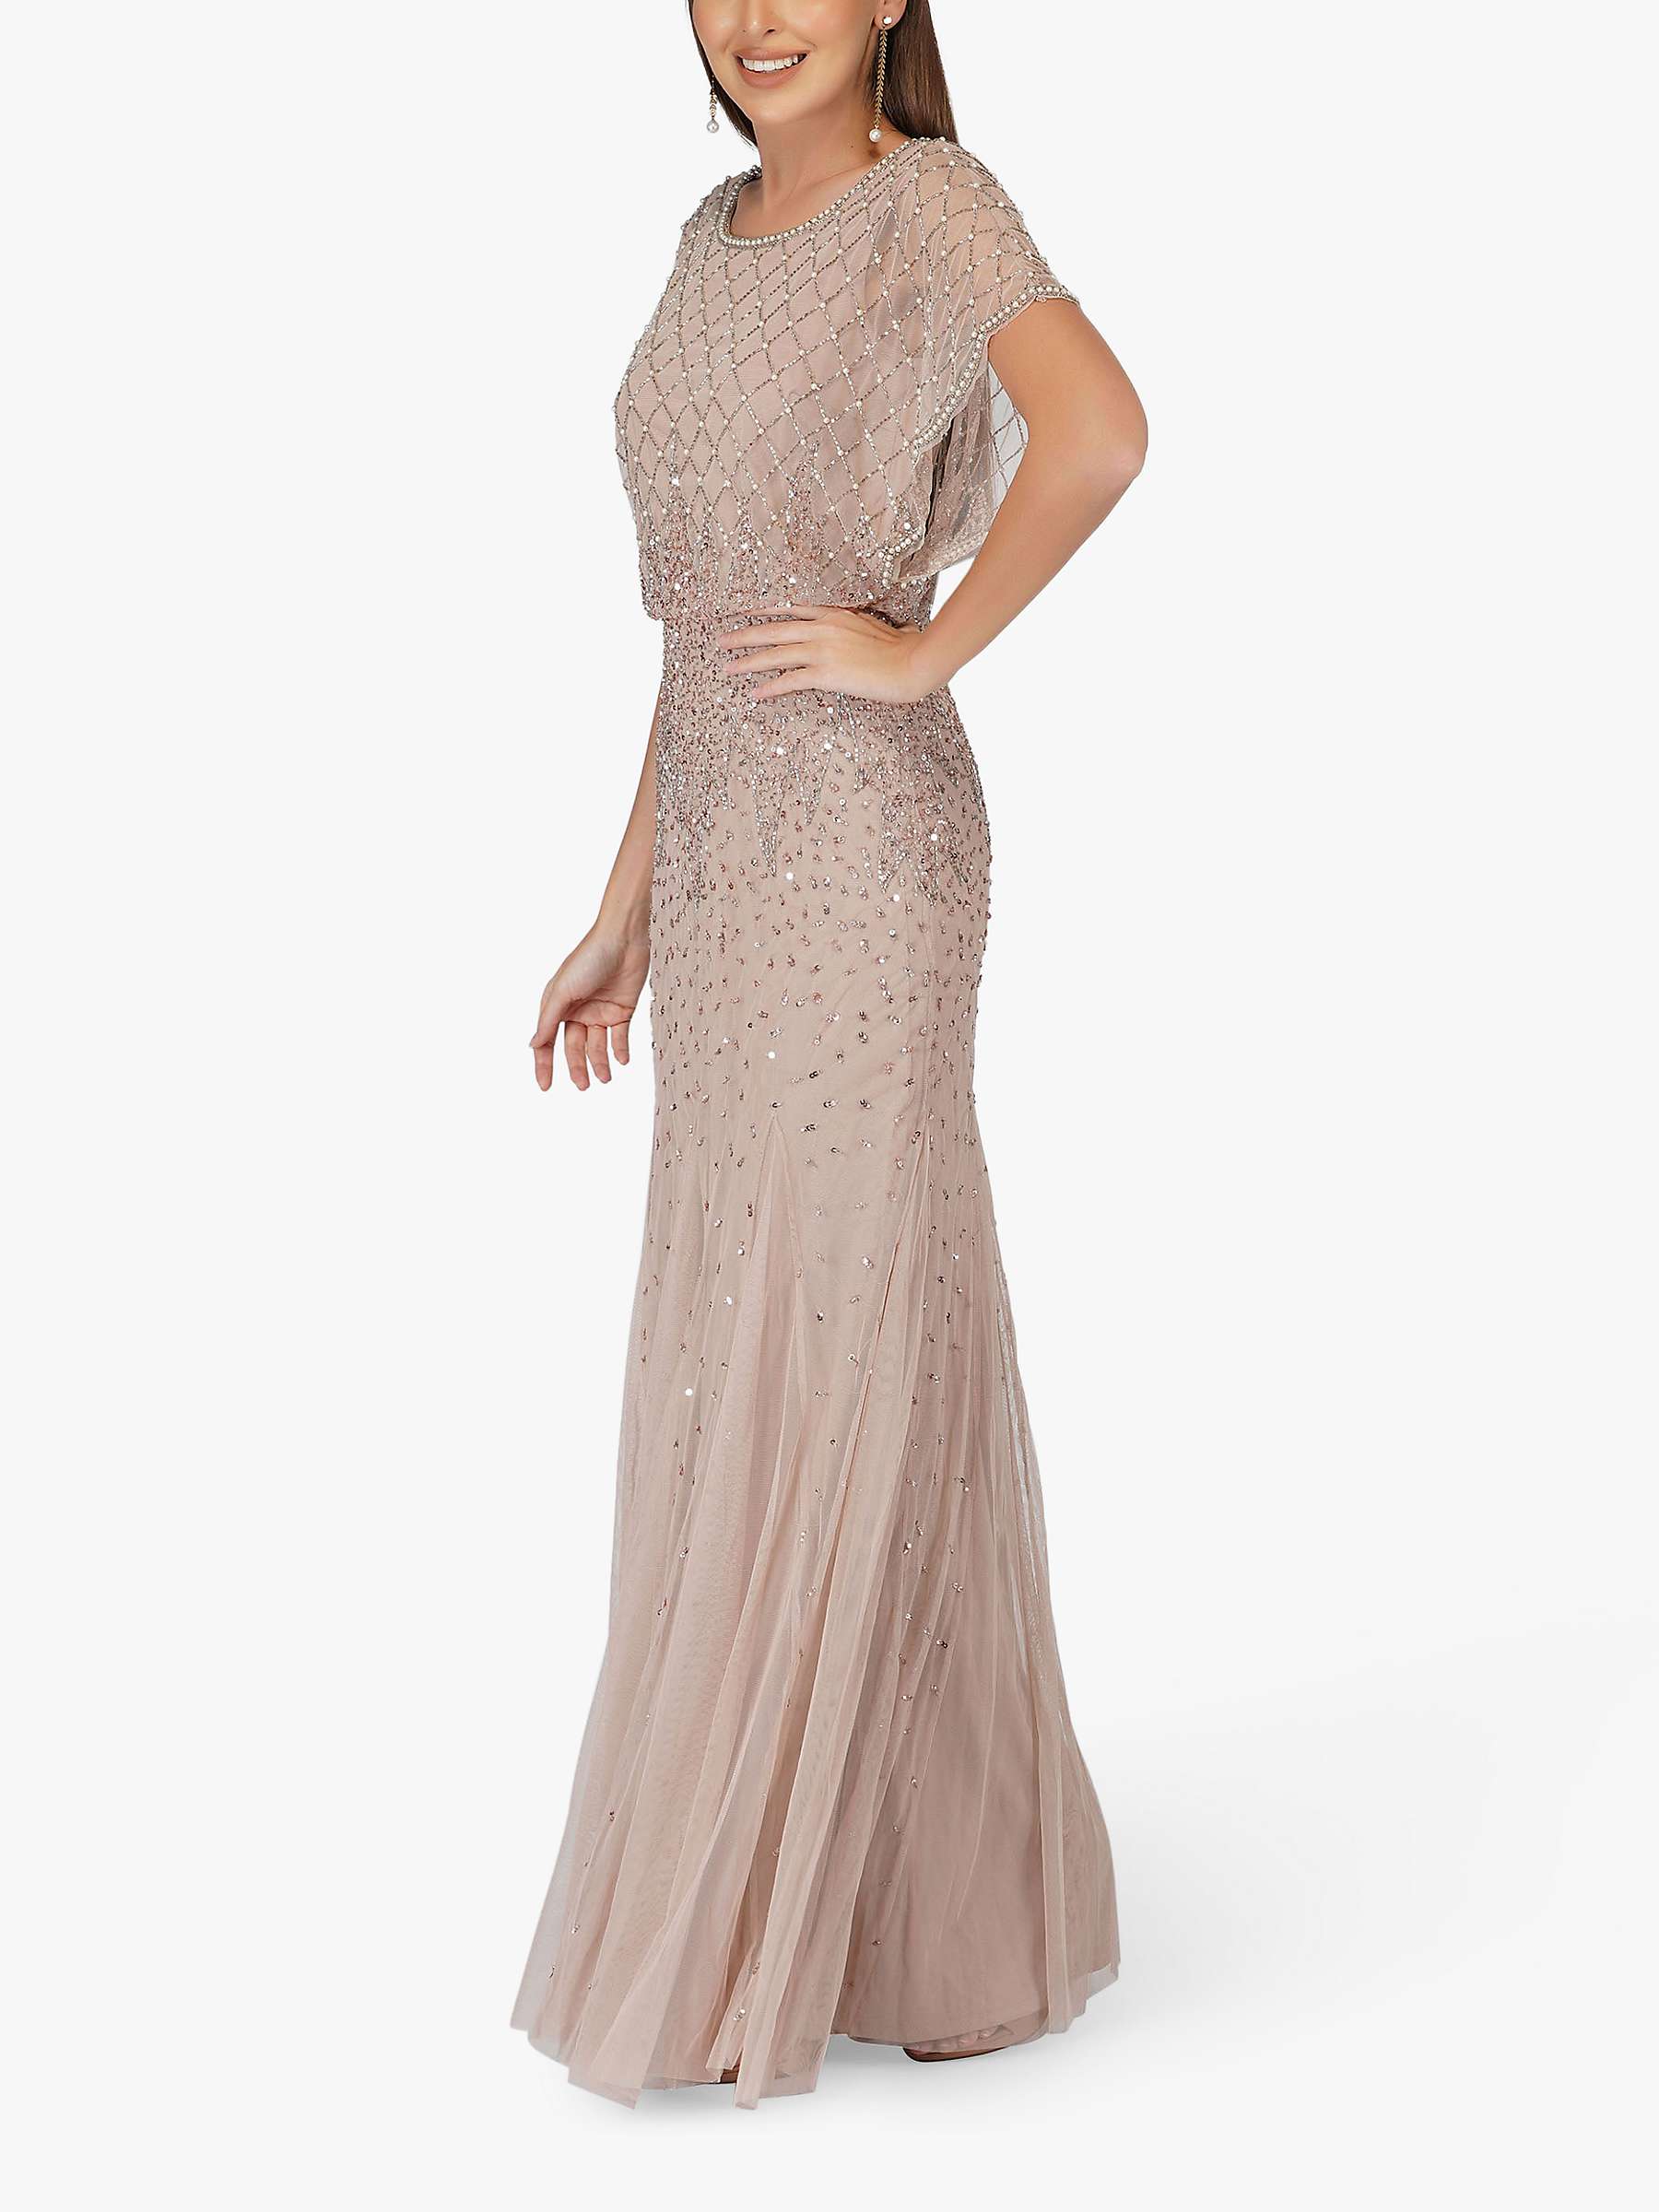 Buy Lace & Beads Nayo Embellished Maxi Dress Online at johnlewis.com